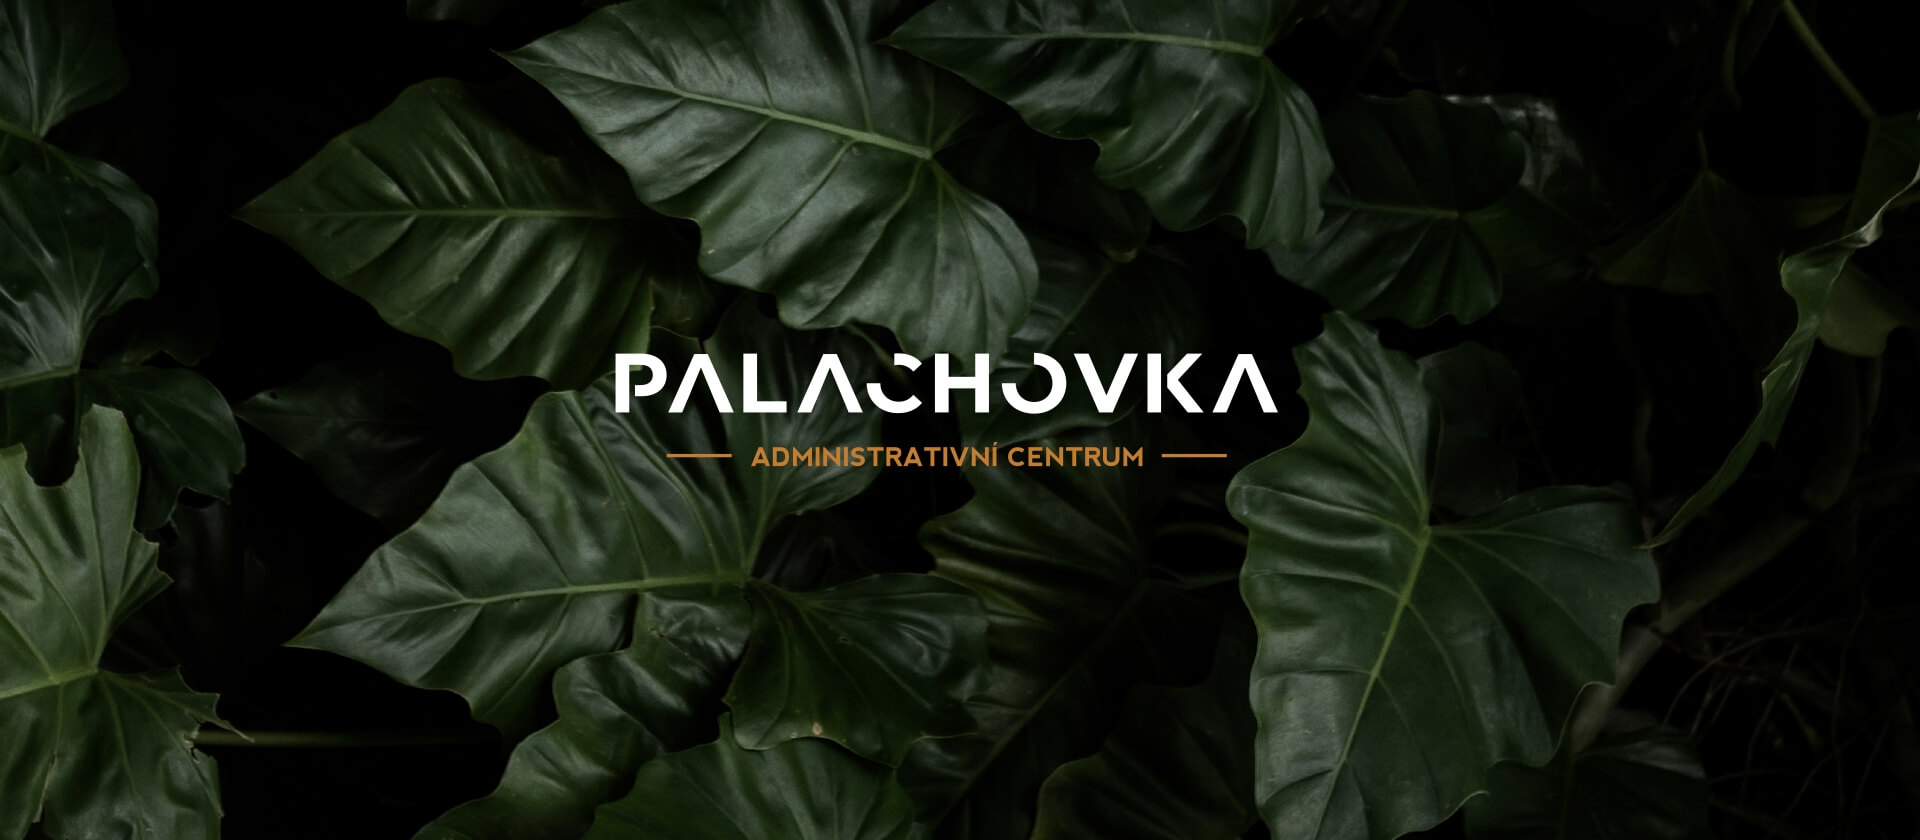 Palachovka